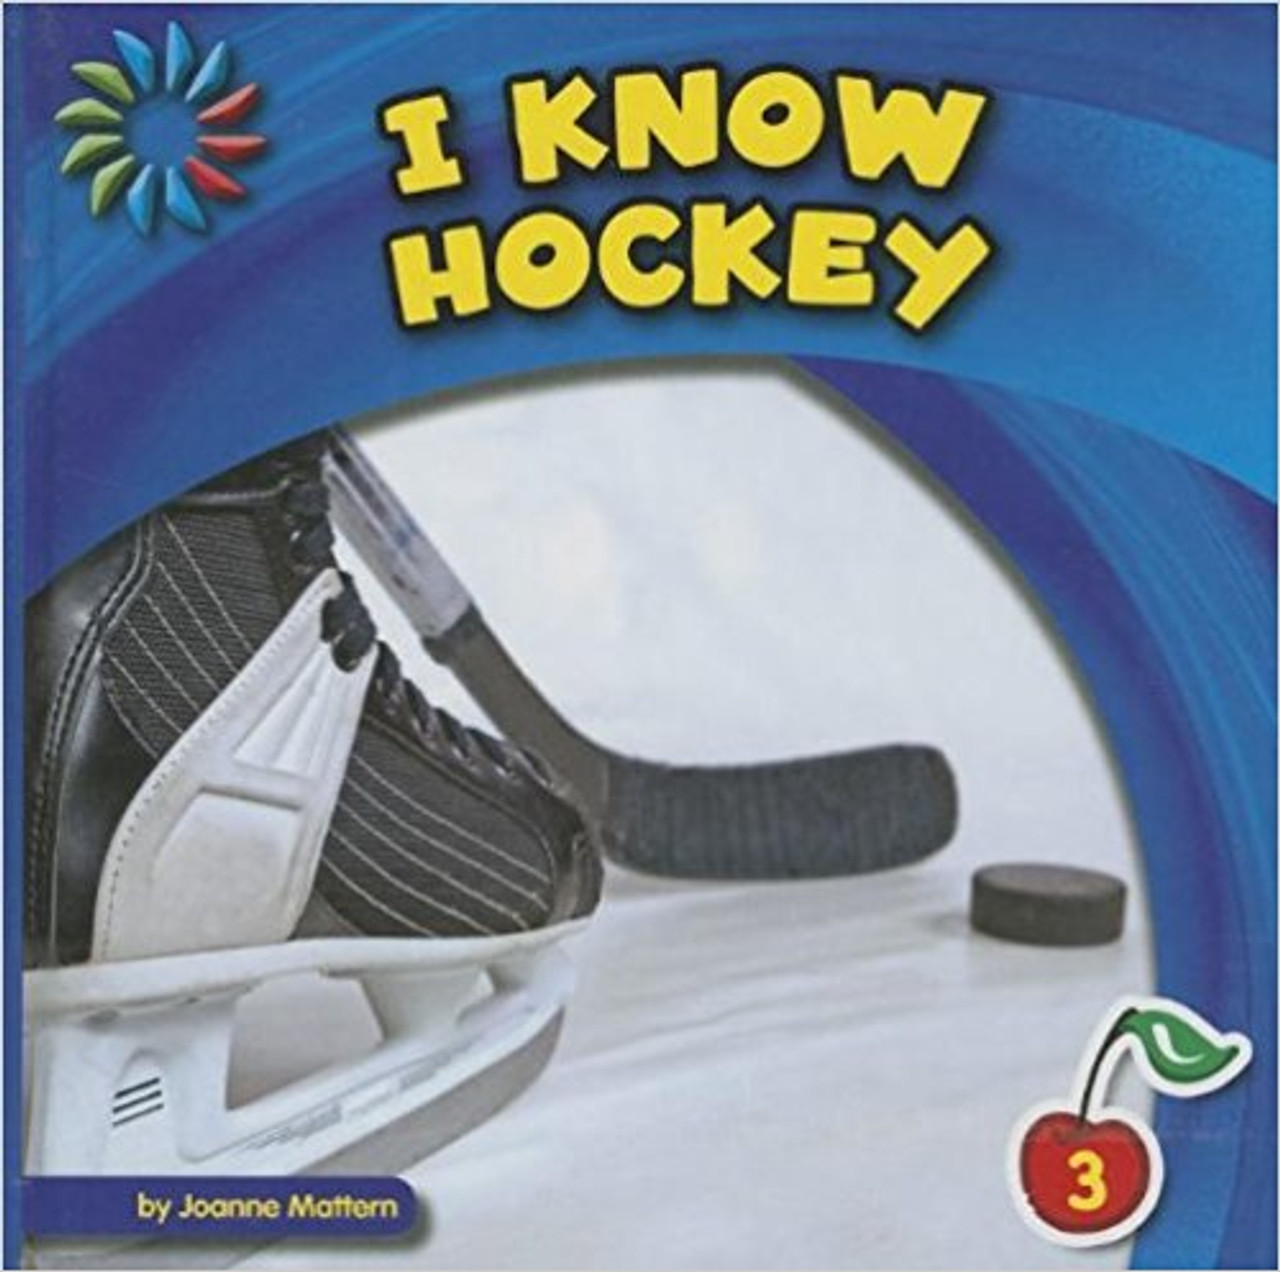 I Know Hockey by Joanne Mattern